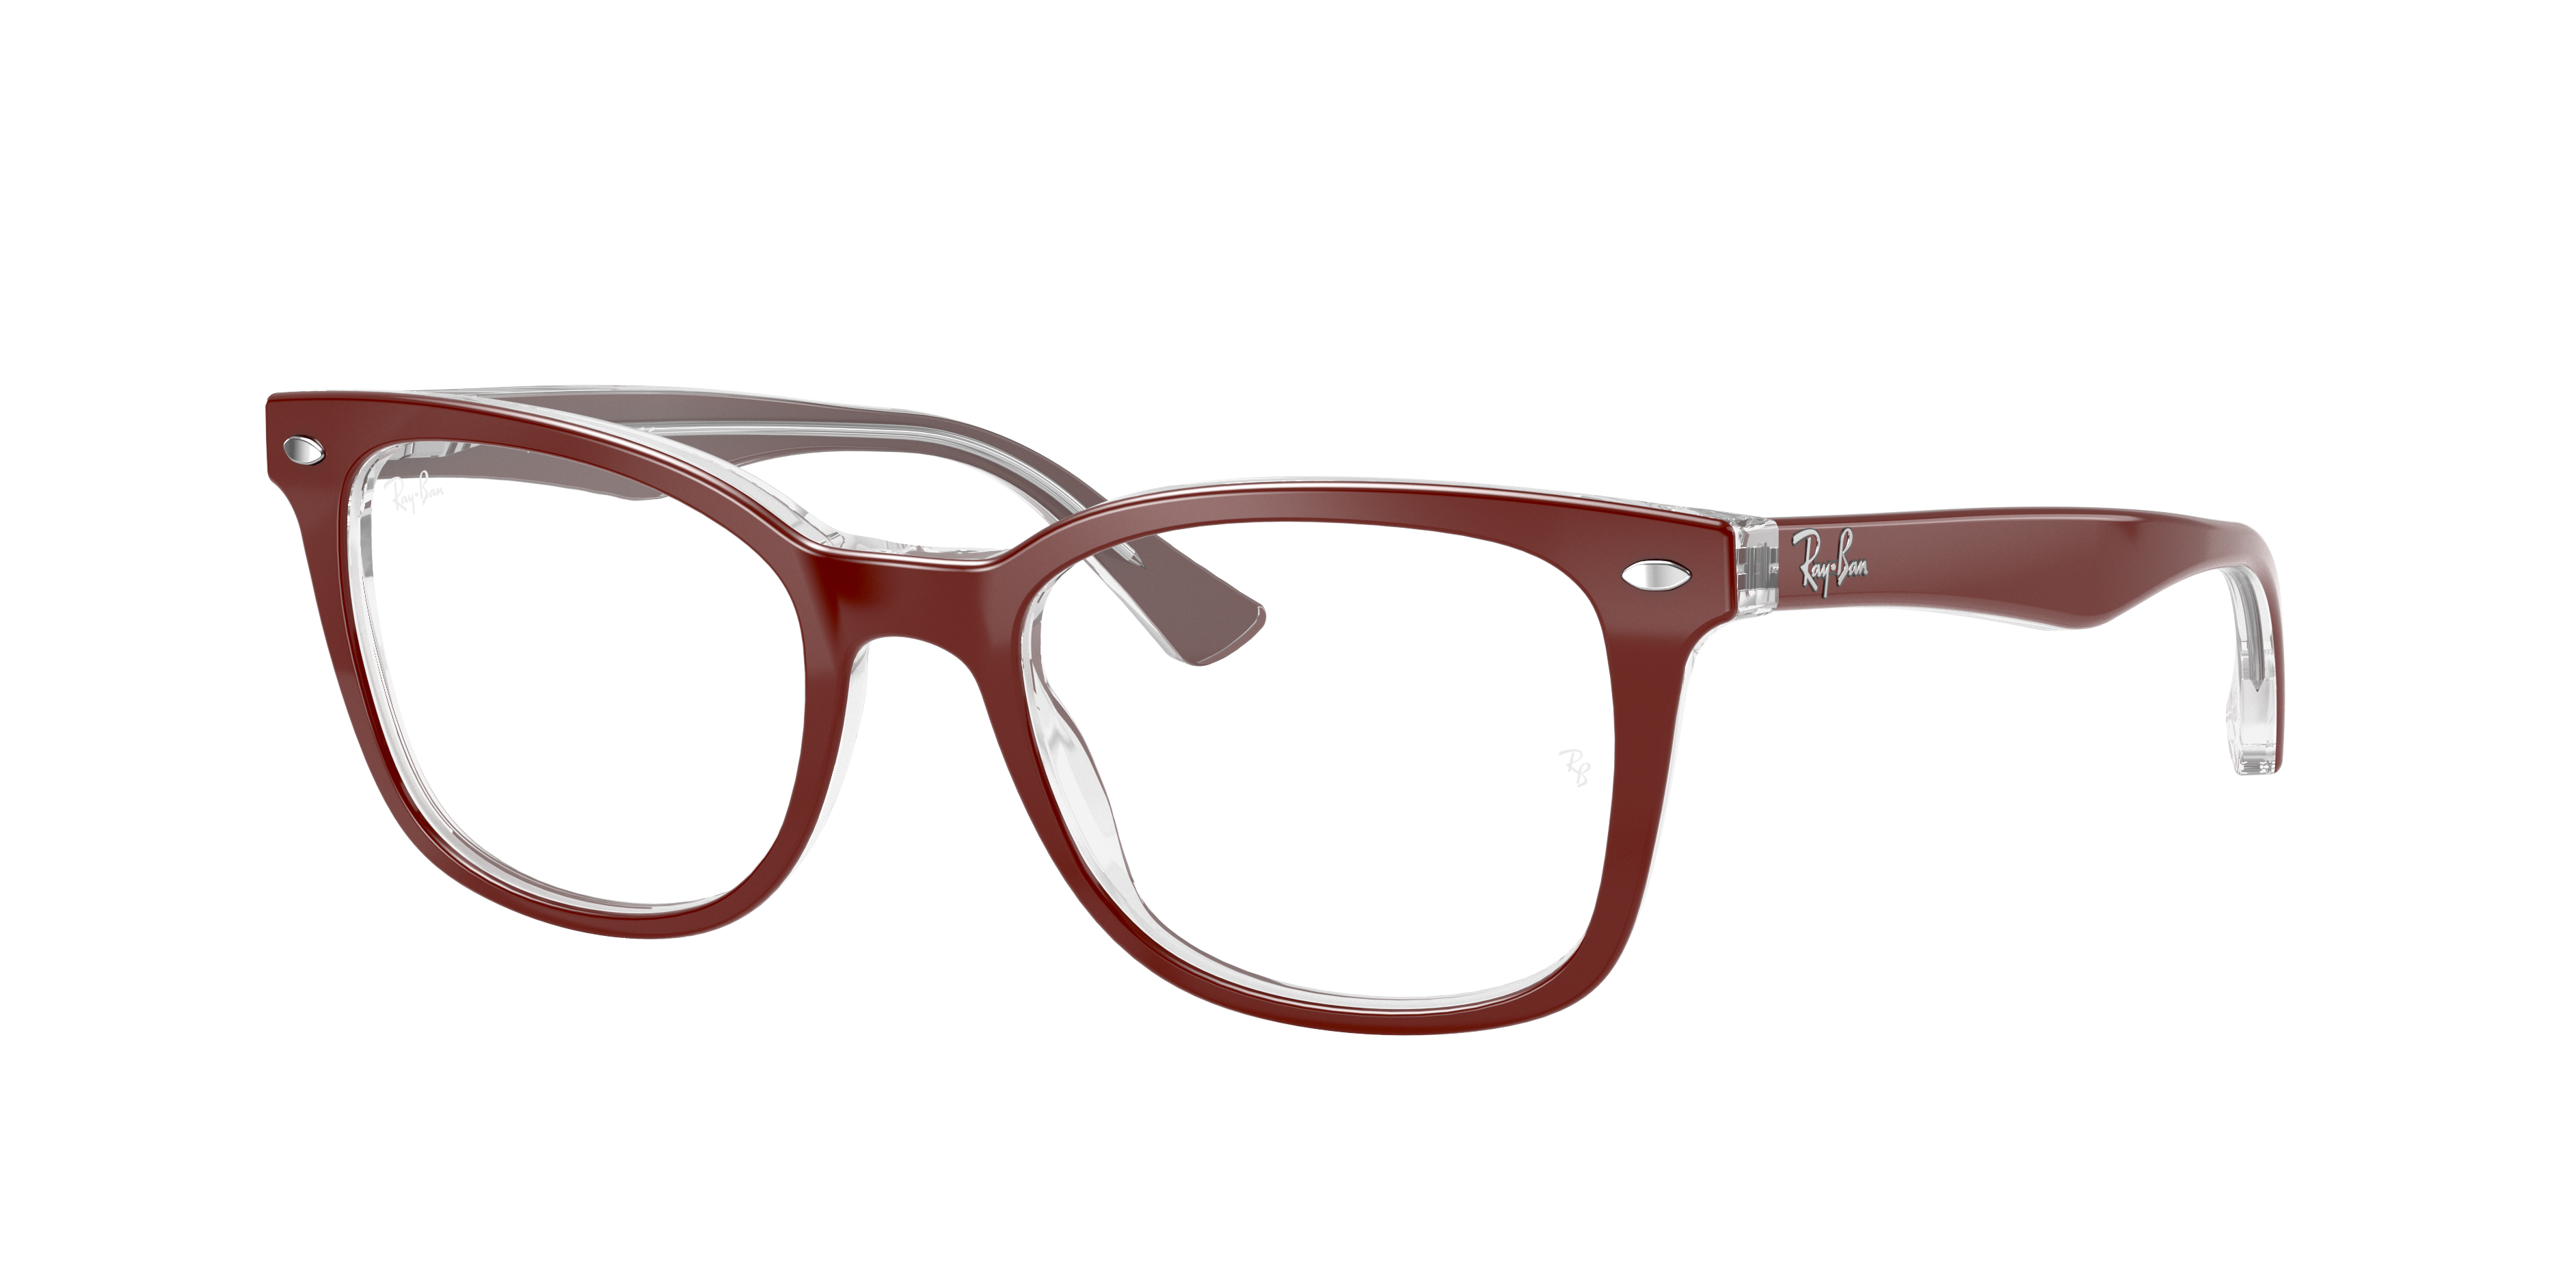 Rb5285 Optics Eyeglasses with Bordeaux On Transparent Frame - RB5285 ...